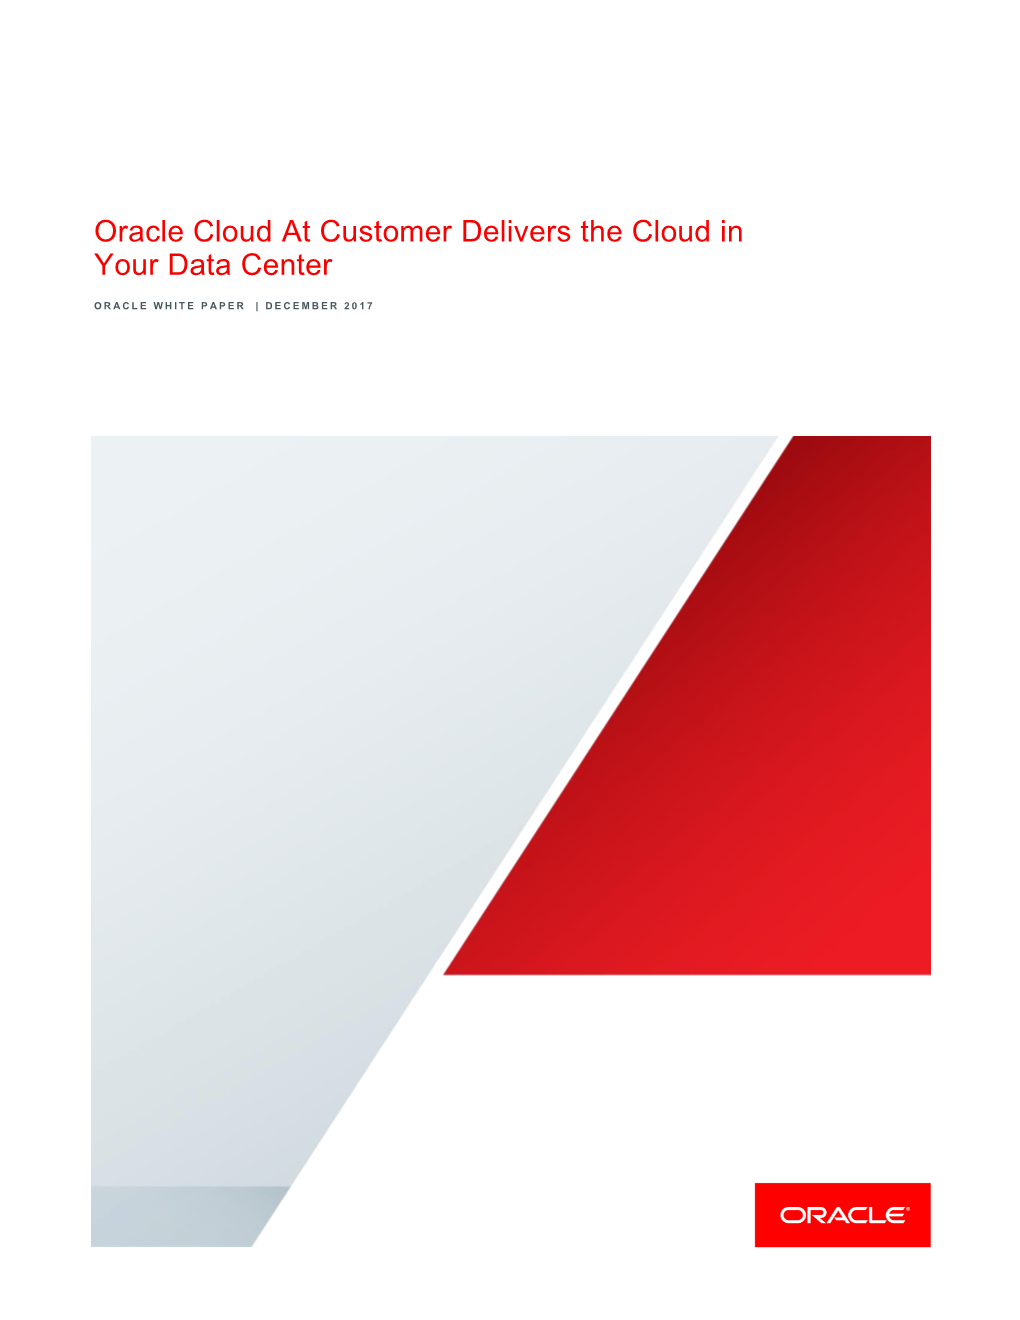 Overview of Oracle Public Cloud Machine